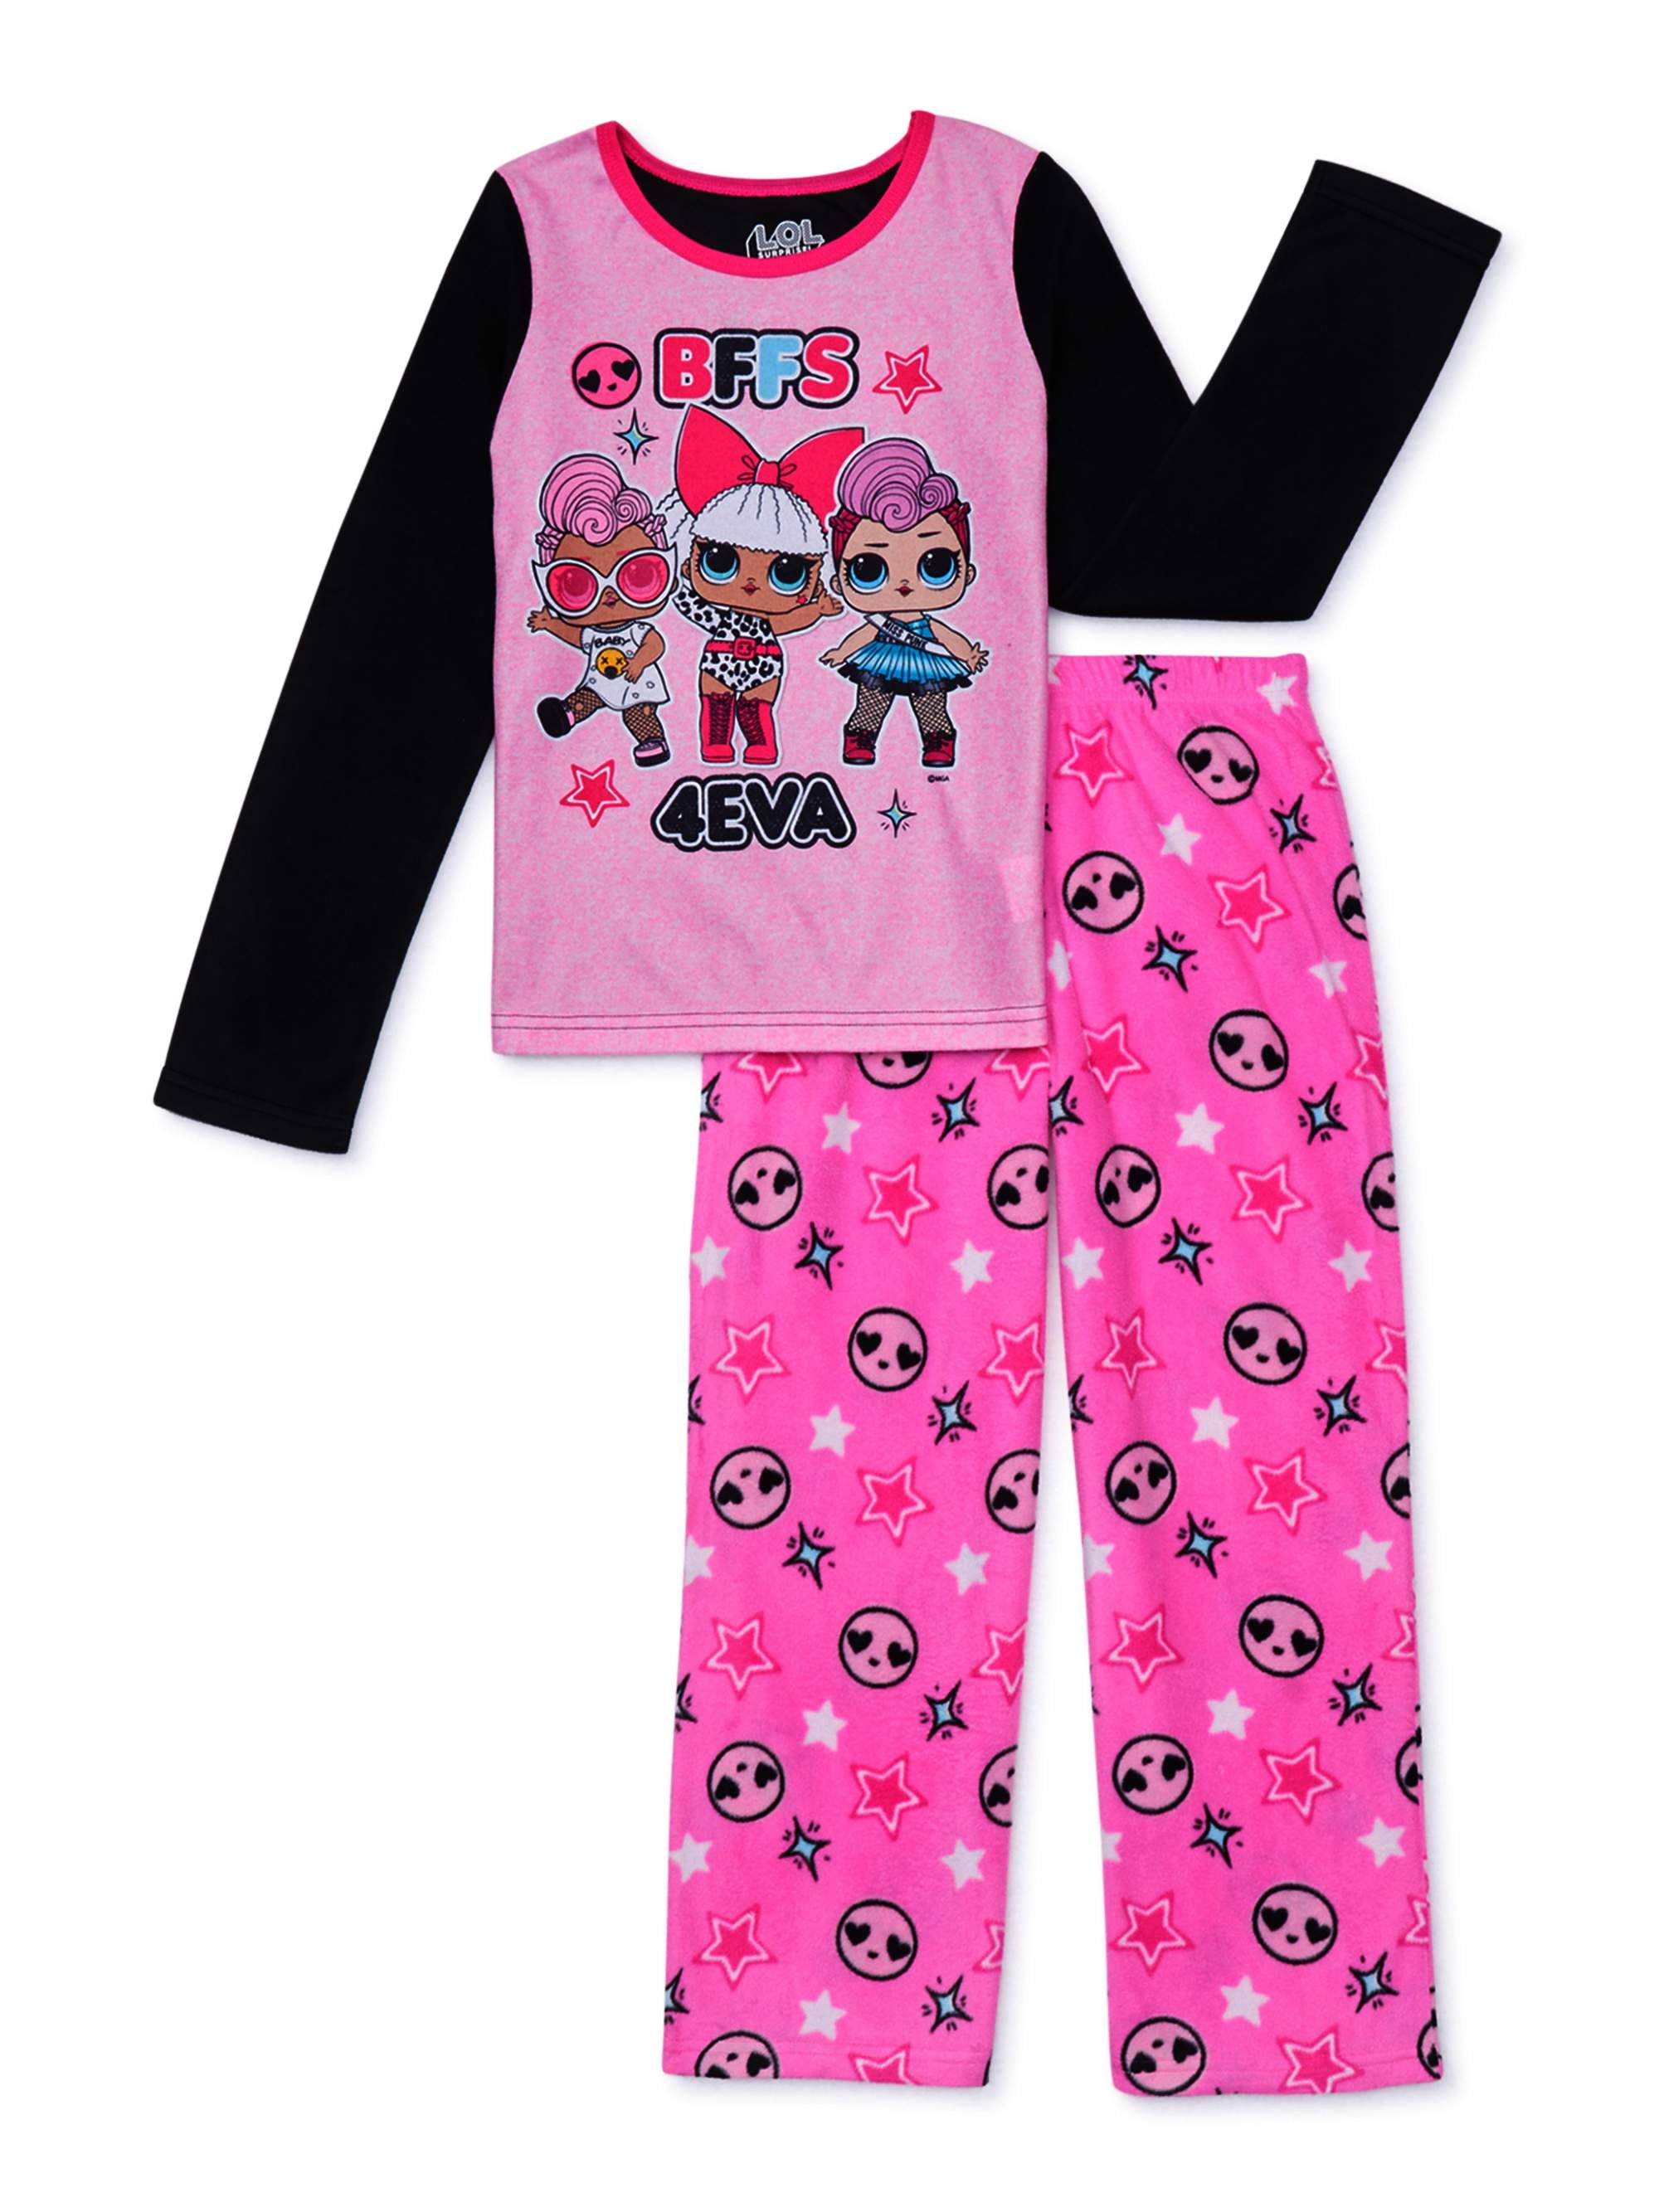 Dreamworks Trolls 2-Piece Long Sleeve Coat Style Pajama Set for Girls Size 7/8 